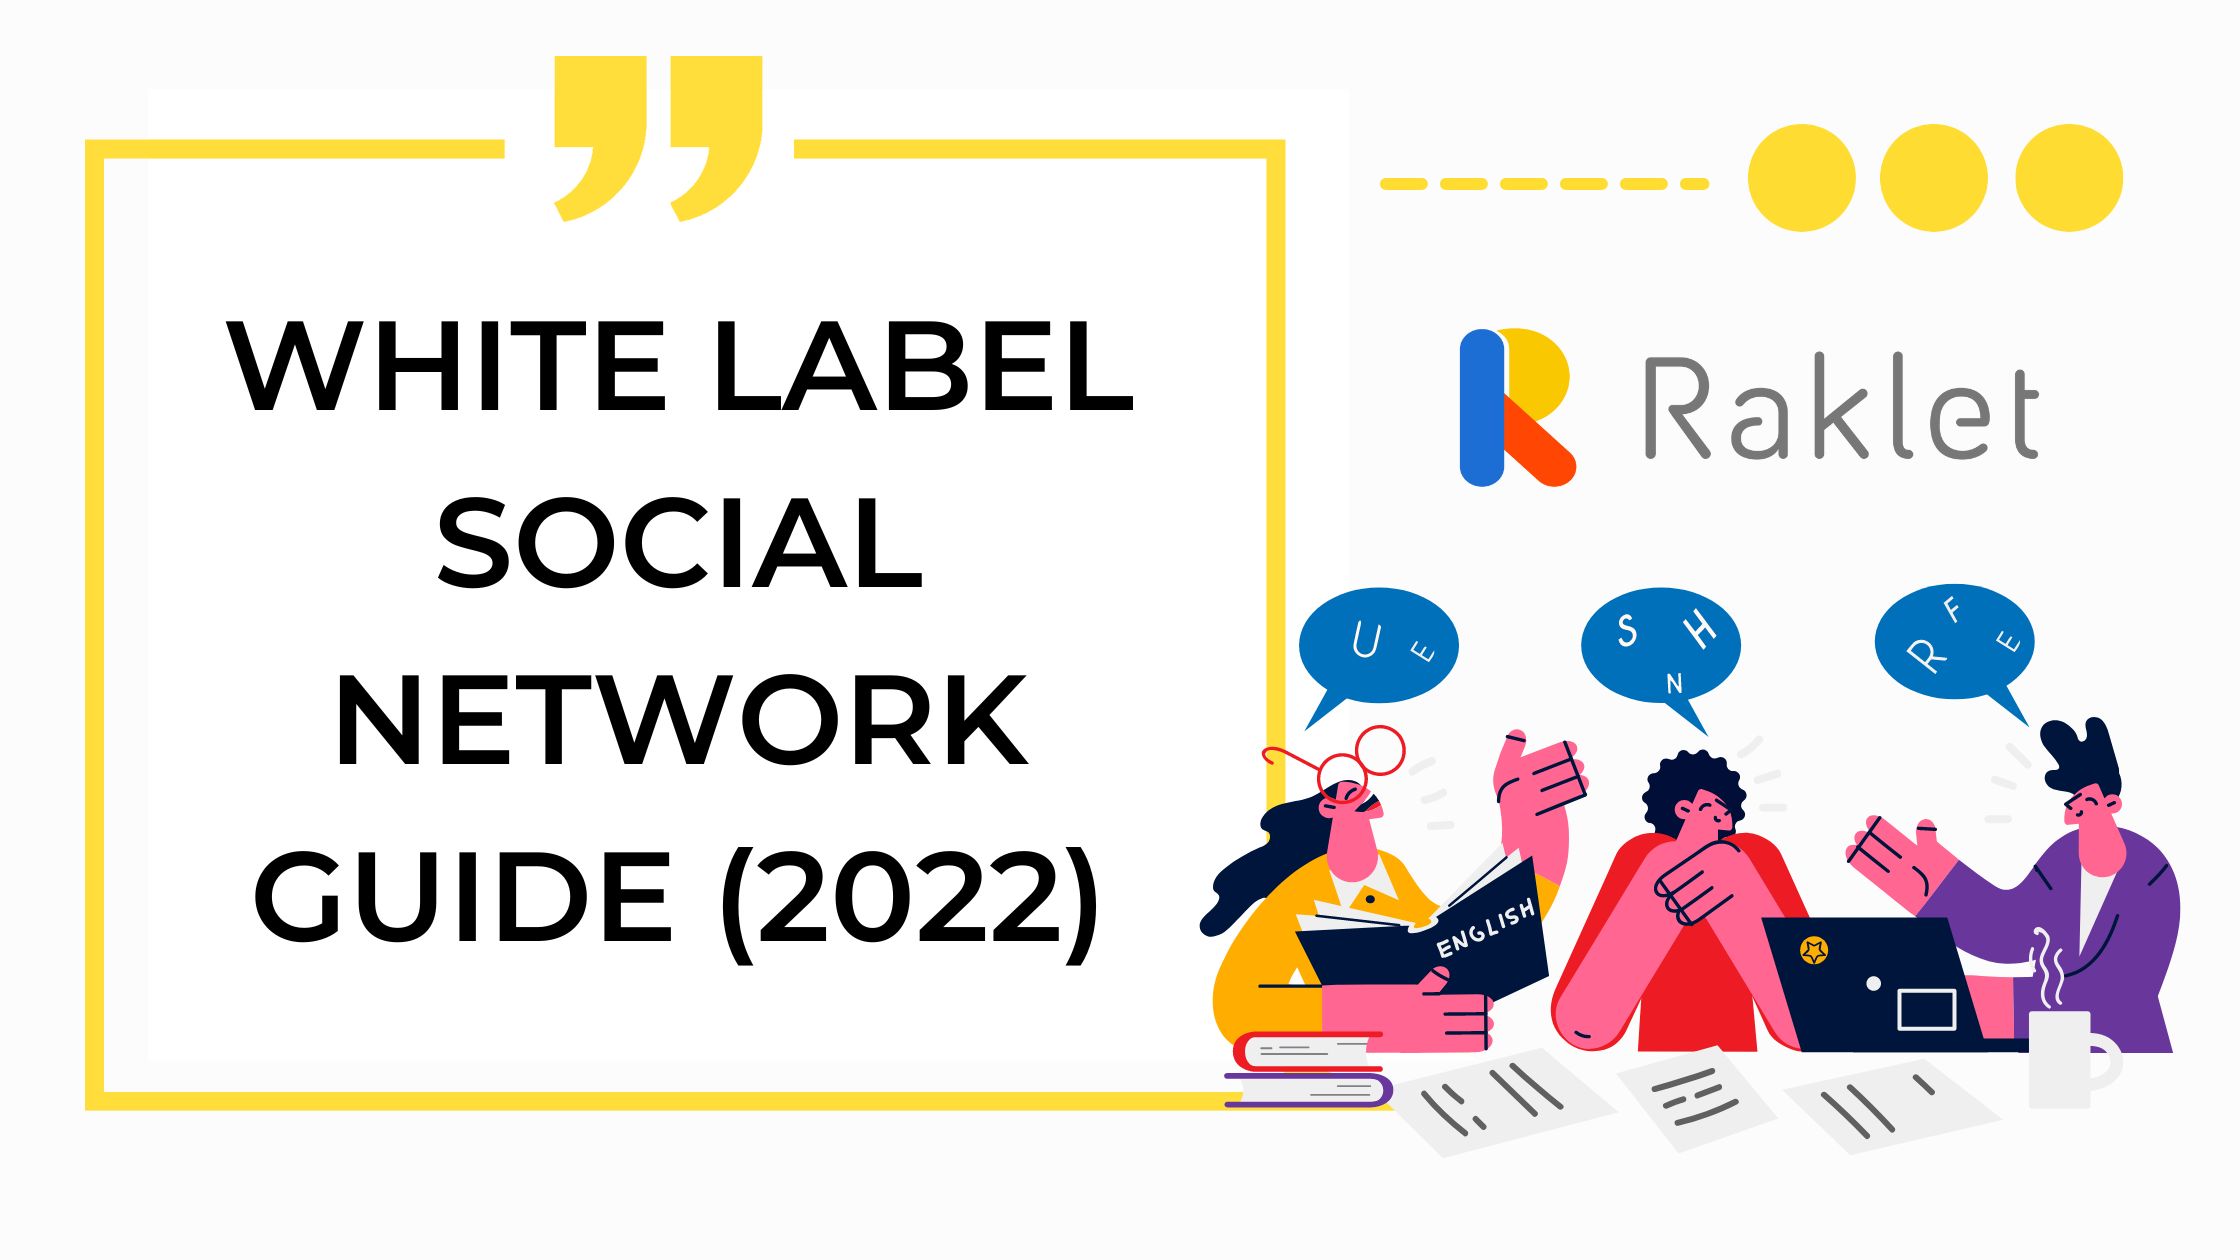 White label social network